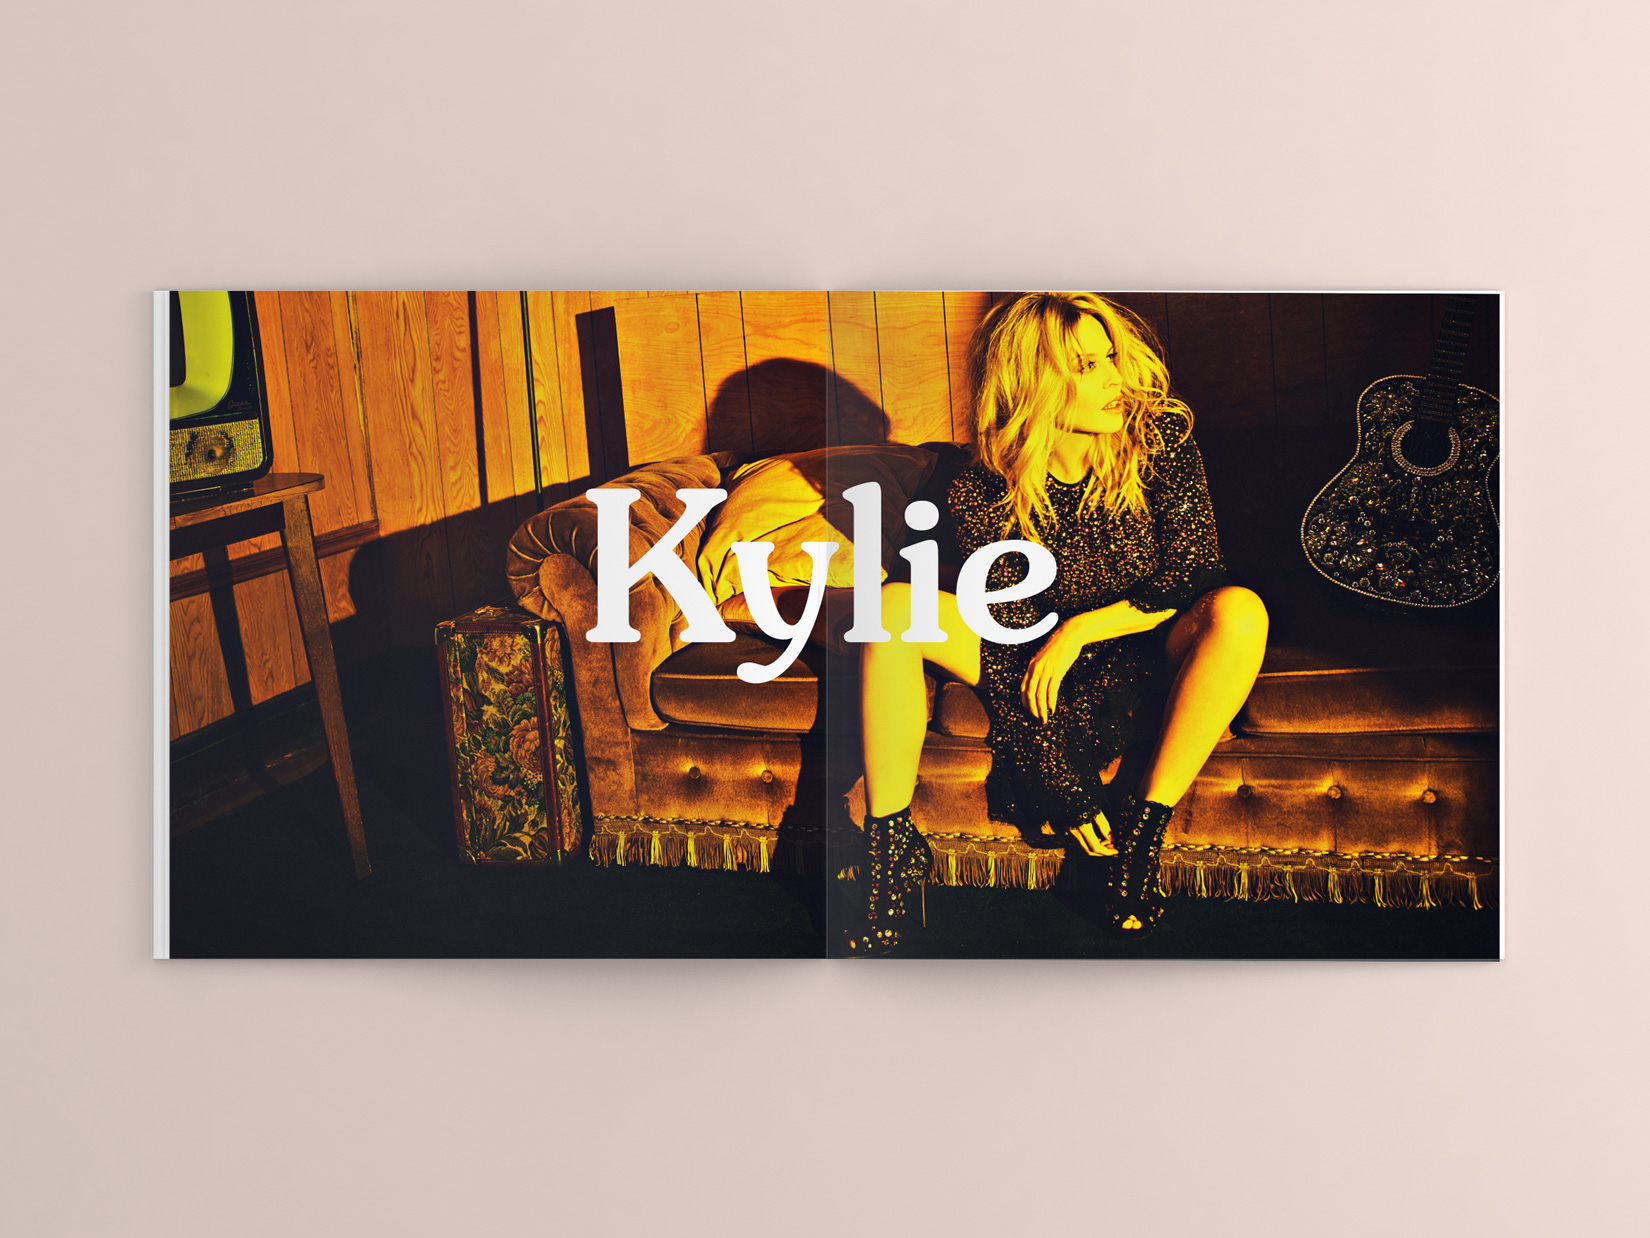 Kylie Minogue – Golden – LP Record Vinyl Album - Rock Vinyl Revival